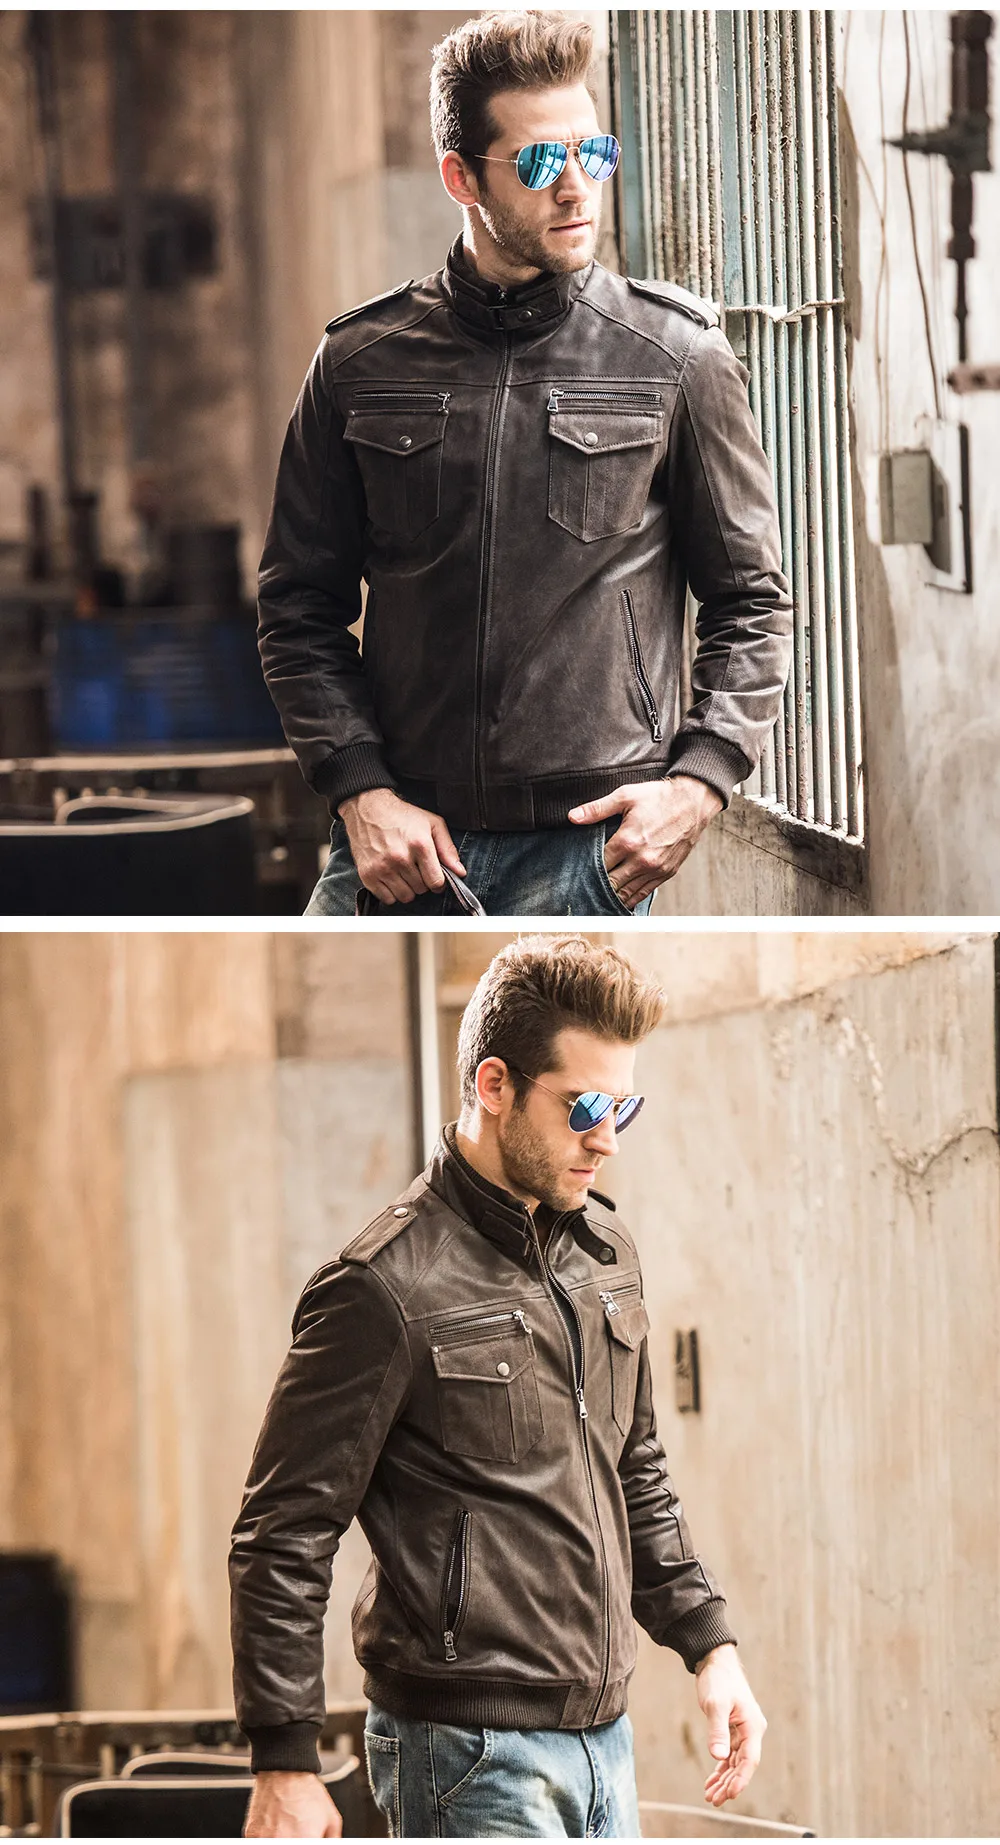 Men's pigskin motorcycle real leather jacket padding cotton winter warm coat male Genuine Leather jacket